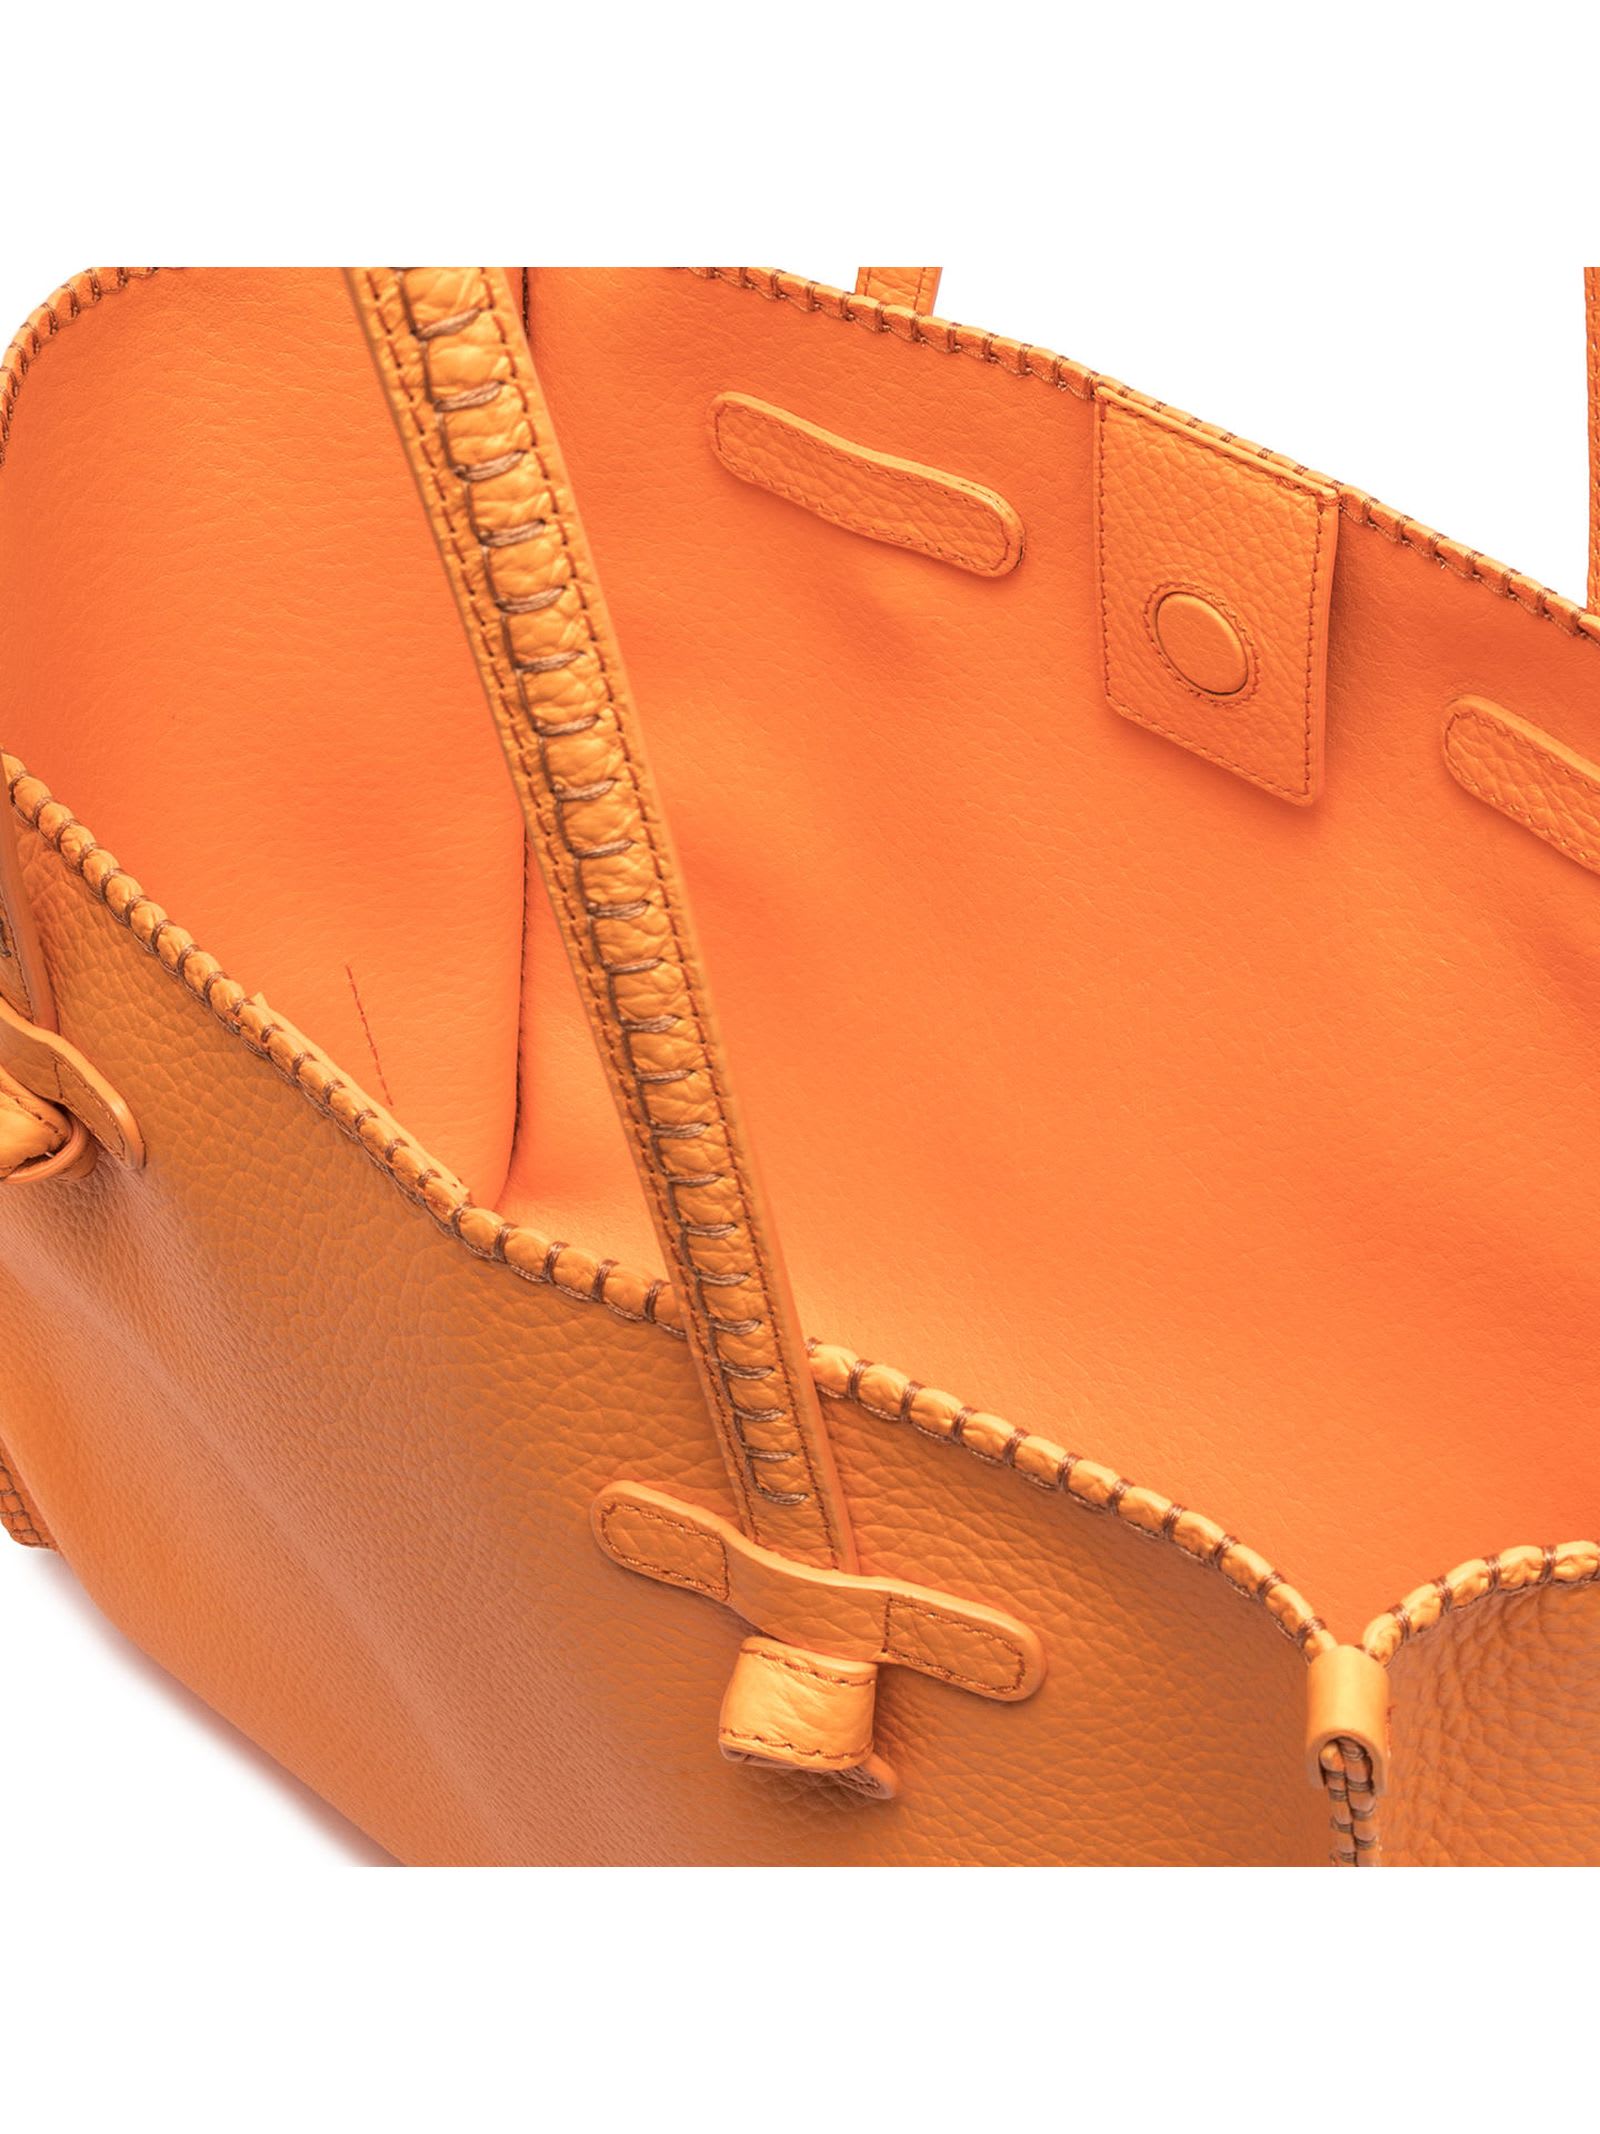 Shop Gianni Chiarini Orange Soft Leather Shopping Bag